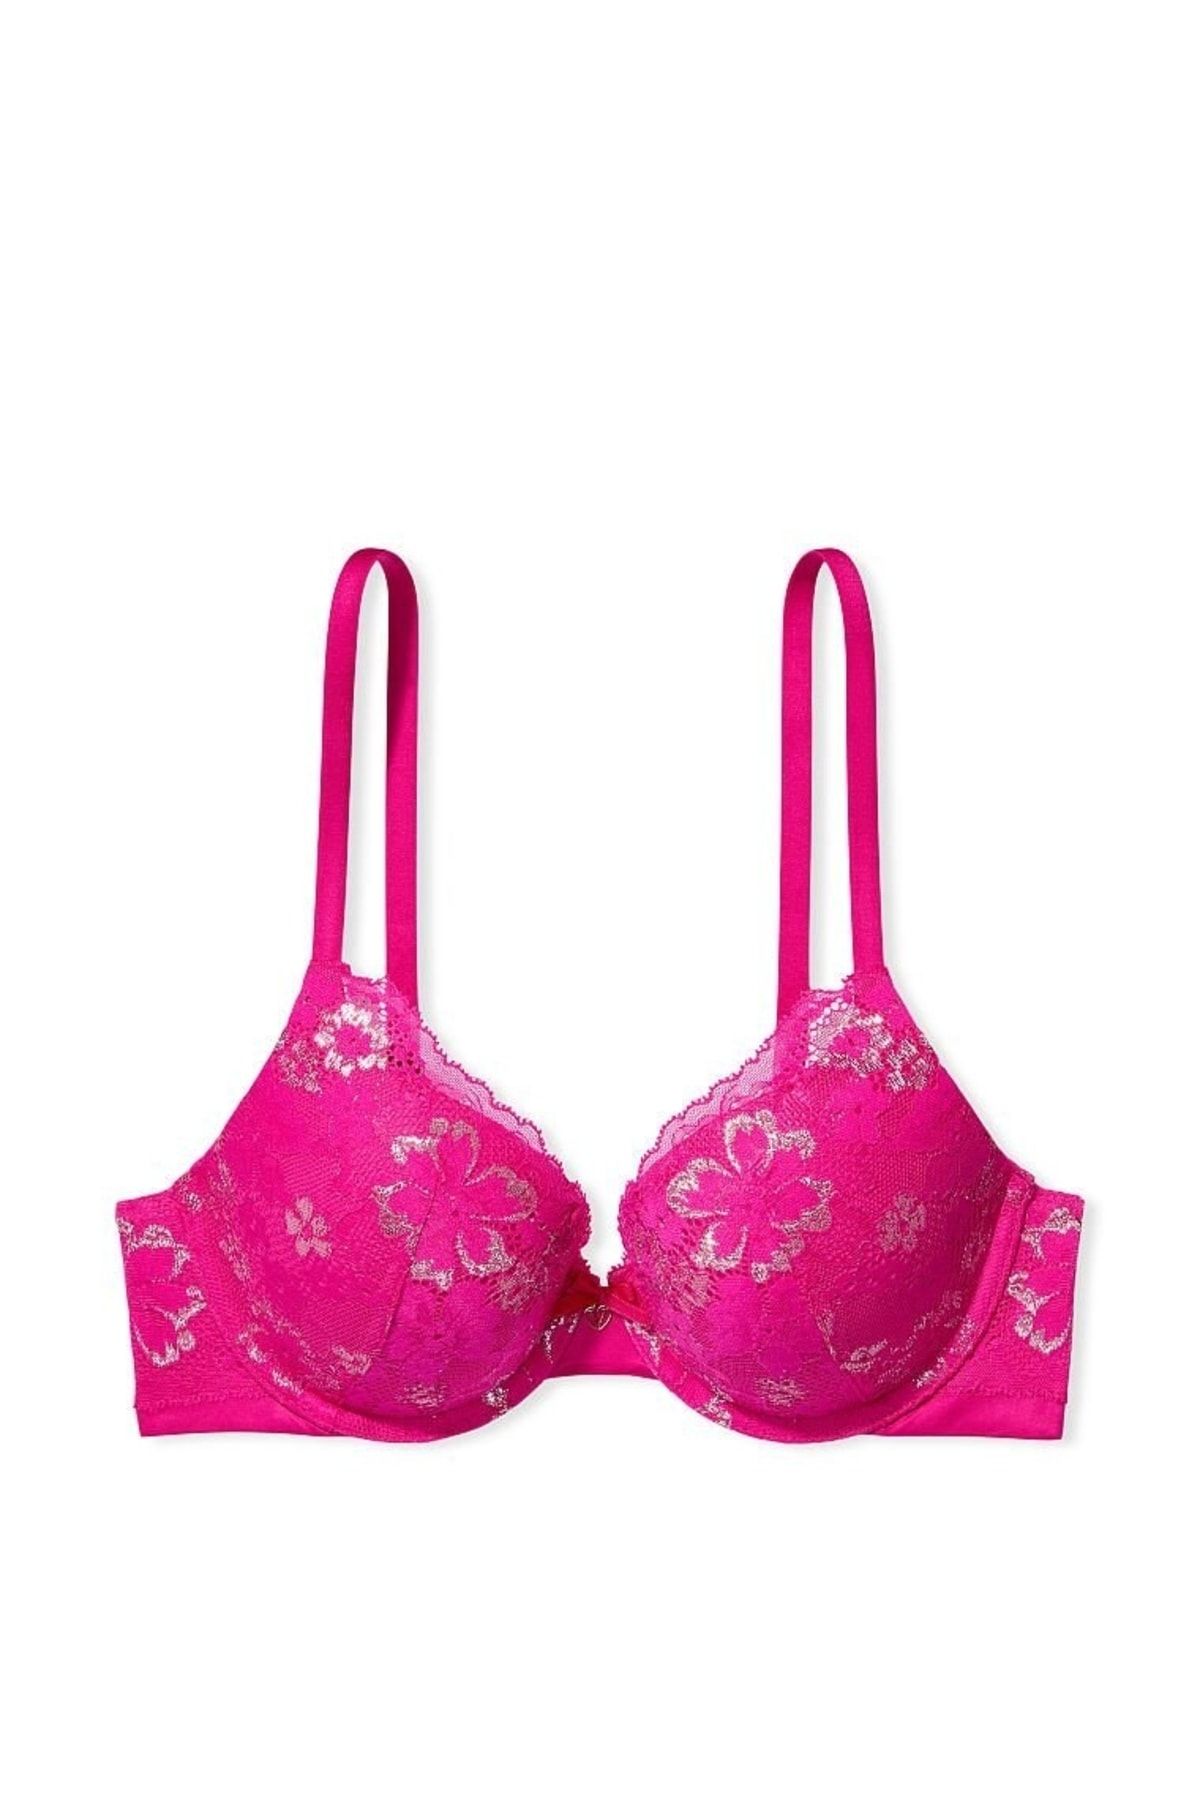 Victoria's Secret Bra - Pink